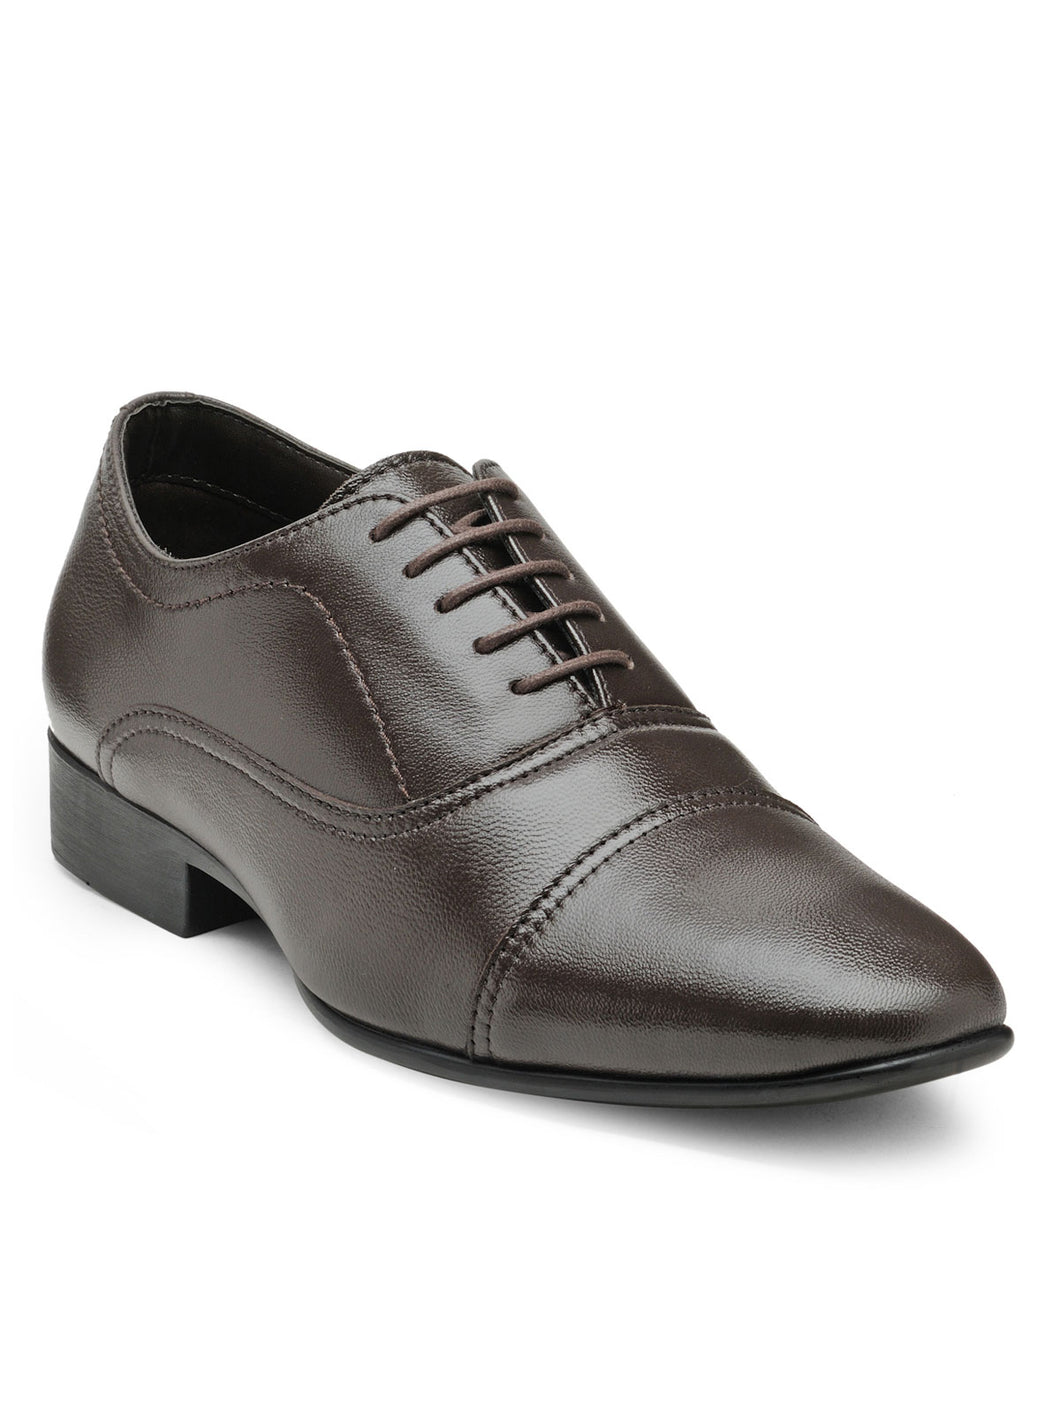 Teakwood Leather Men's Brown Derby Shoes